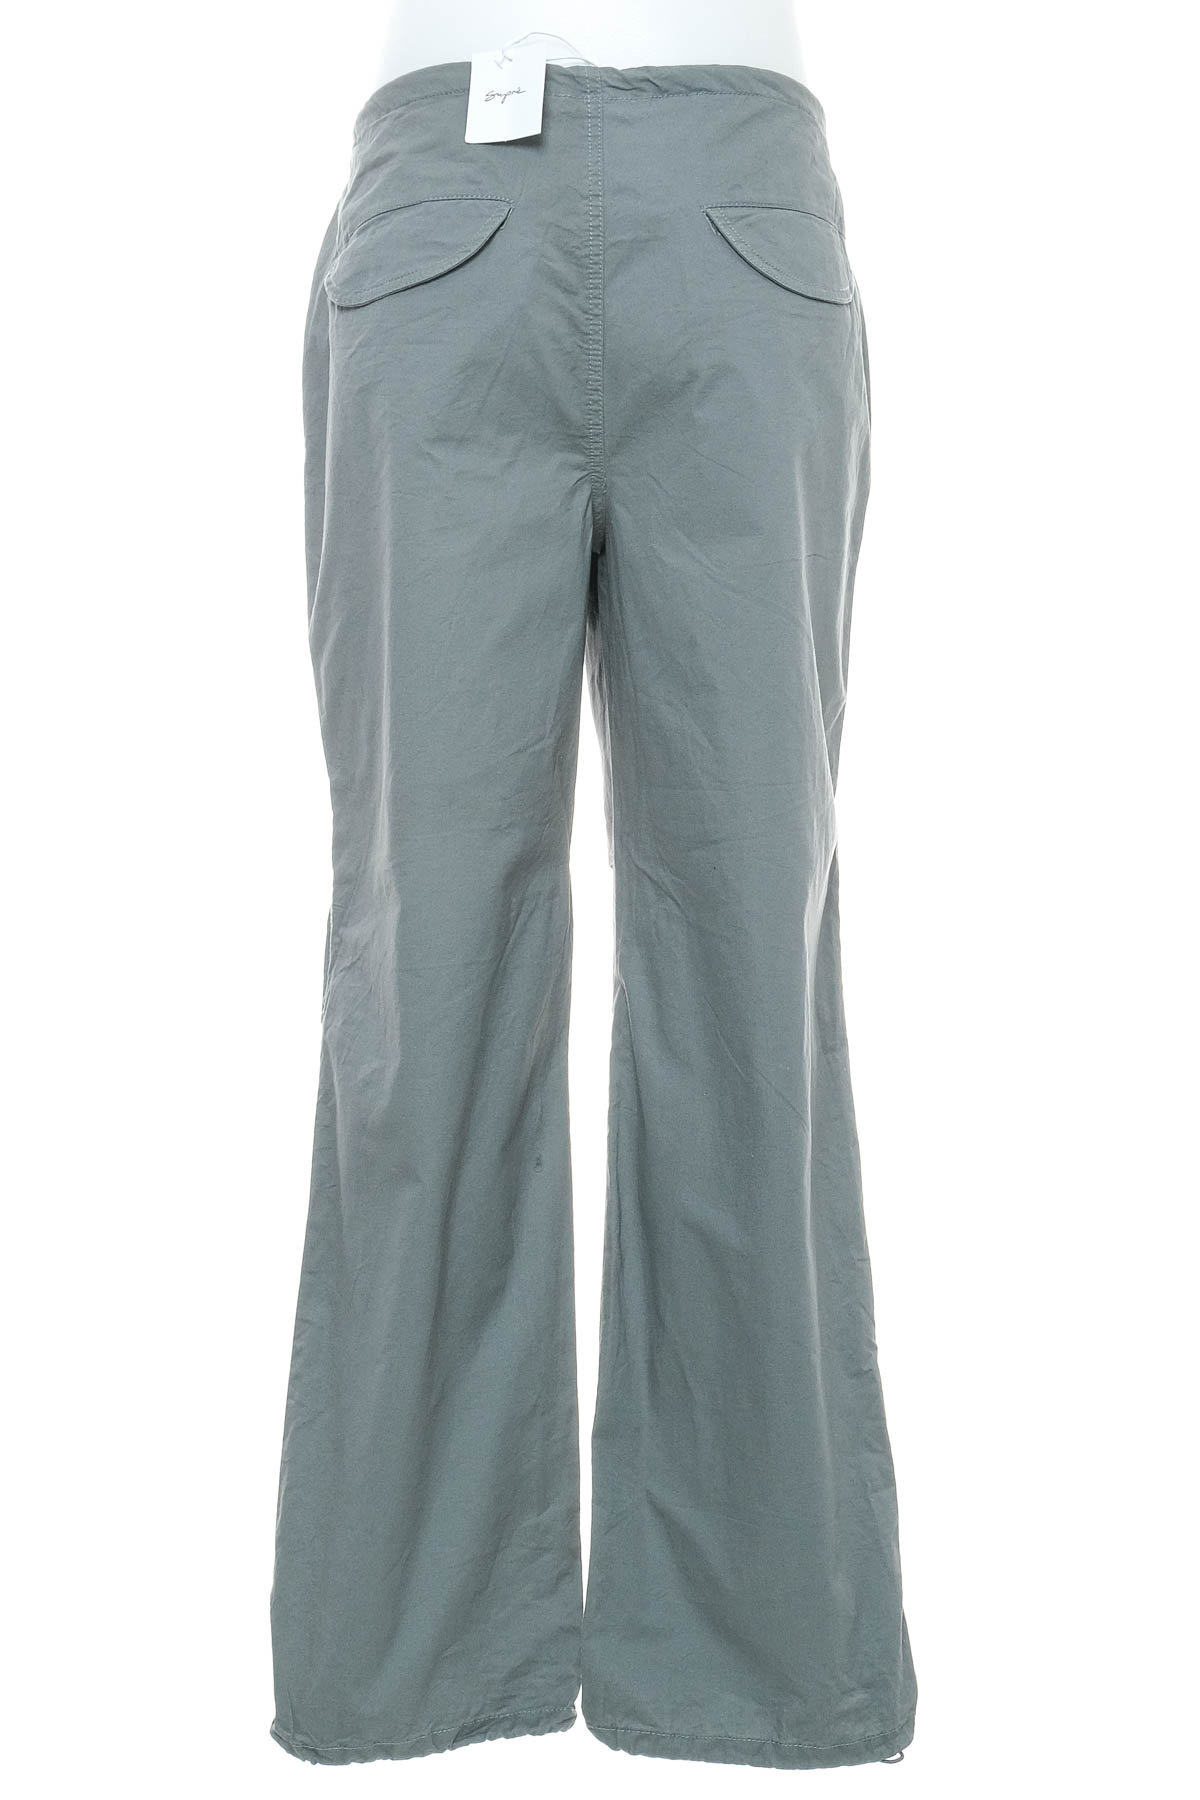 Men's trousers - Supre - 1